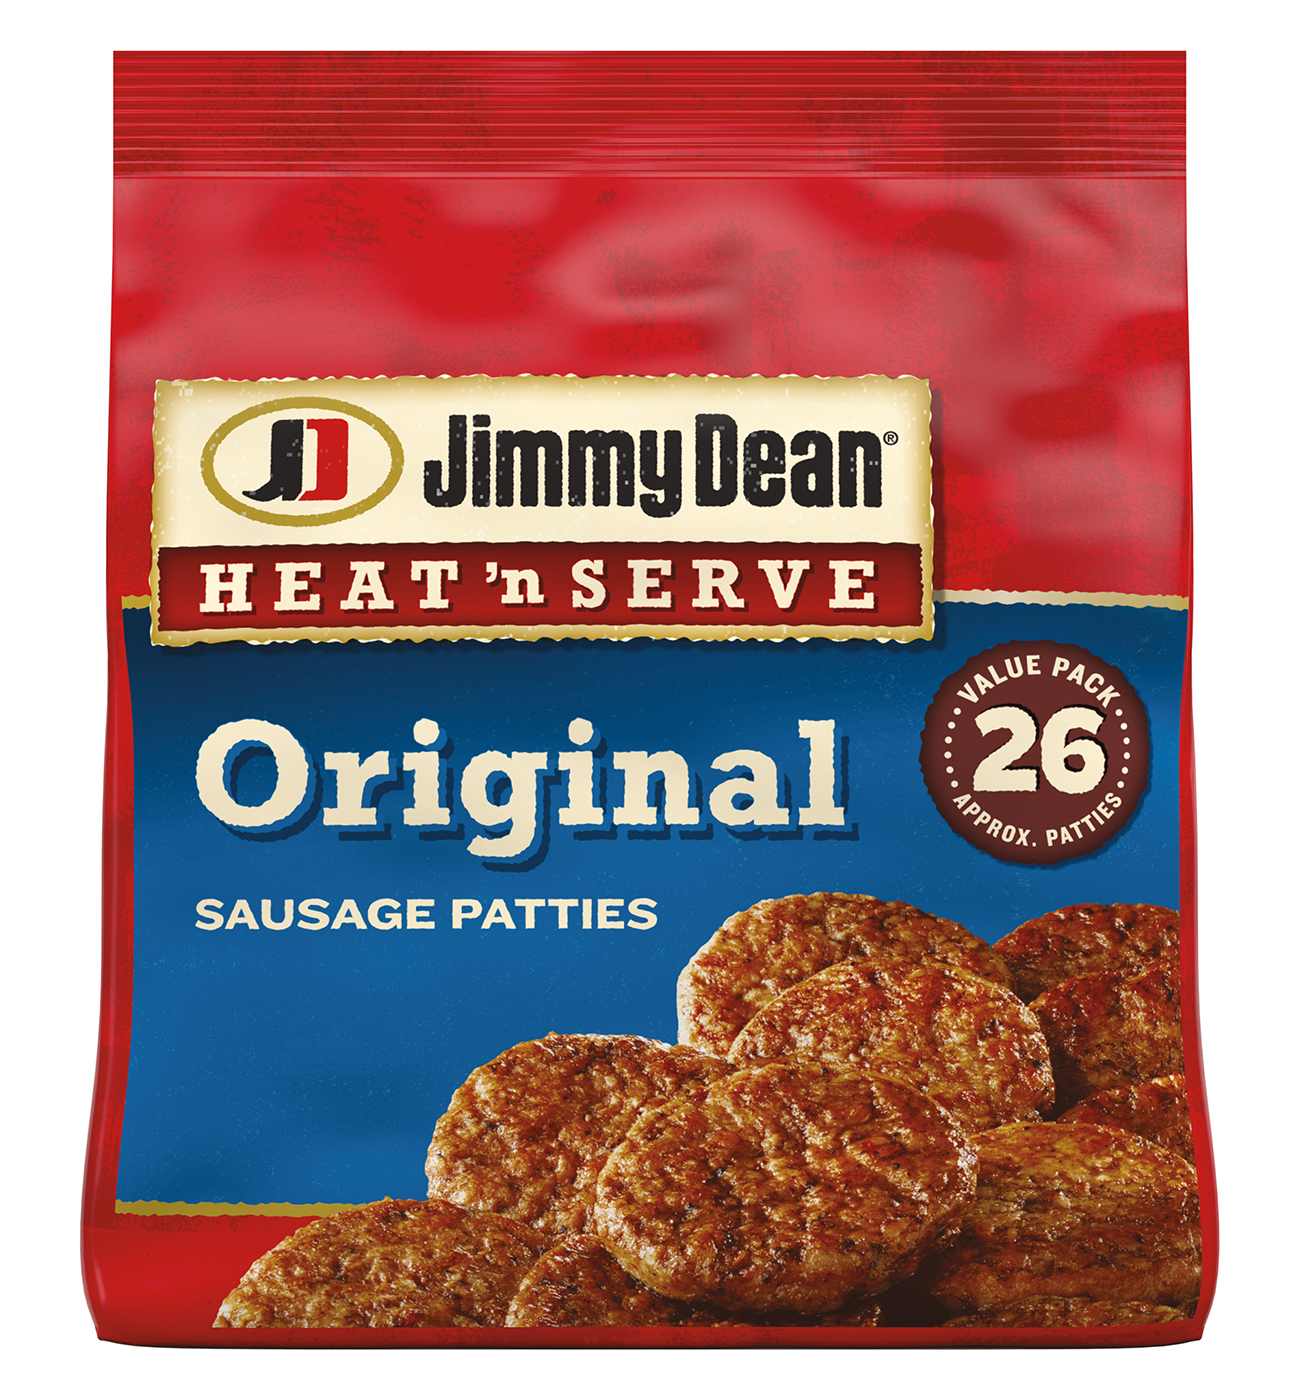 Jimmy Dean Heat 'n Serve Frozen Pork Breakfast Sausage Patties - Original, 26 ct; image 1 of 5